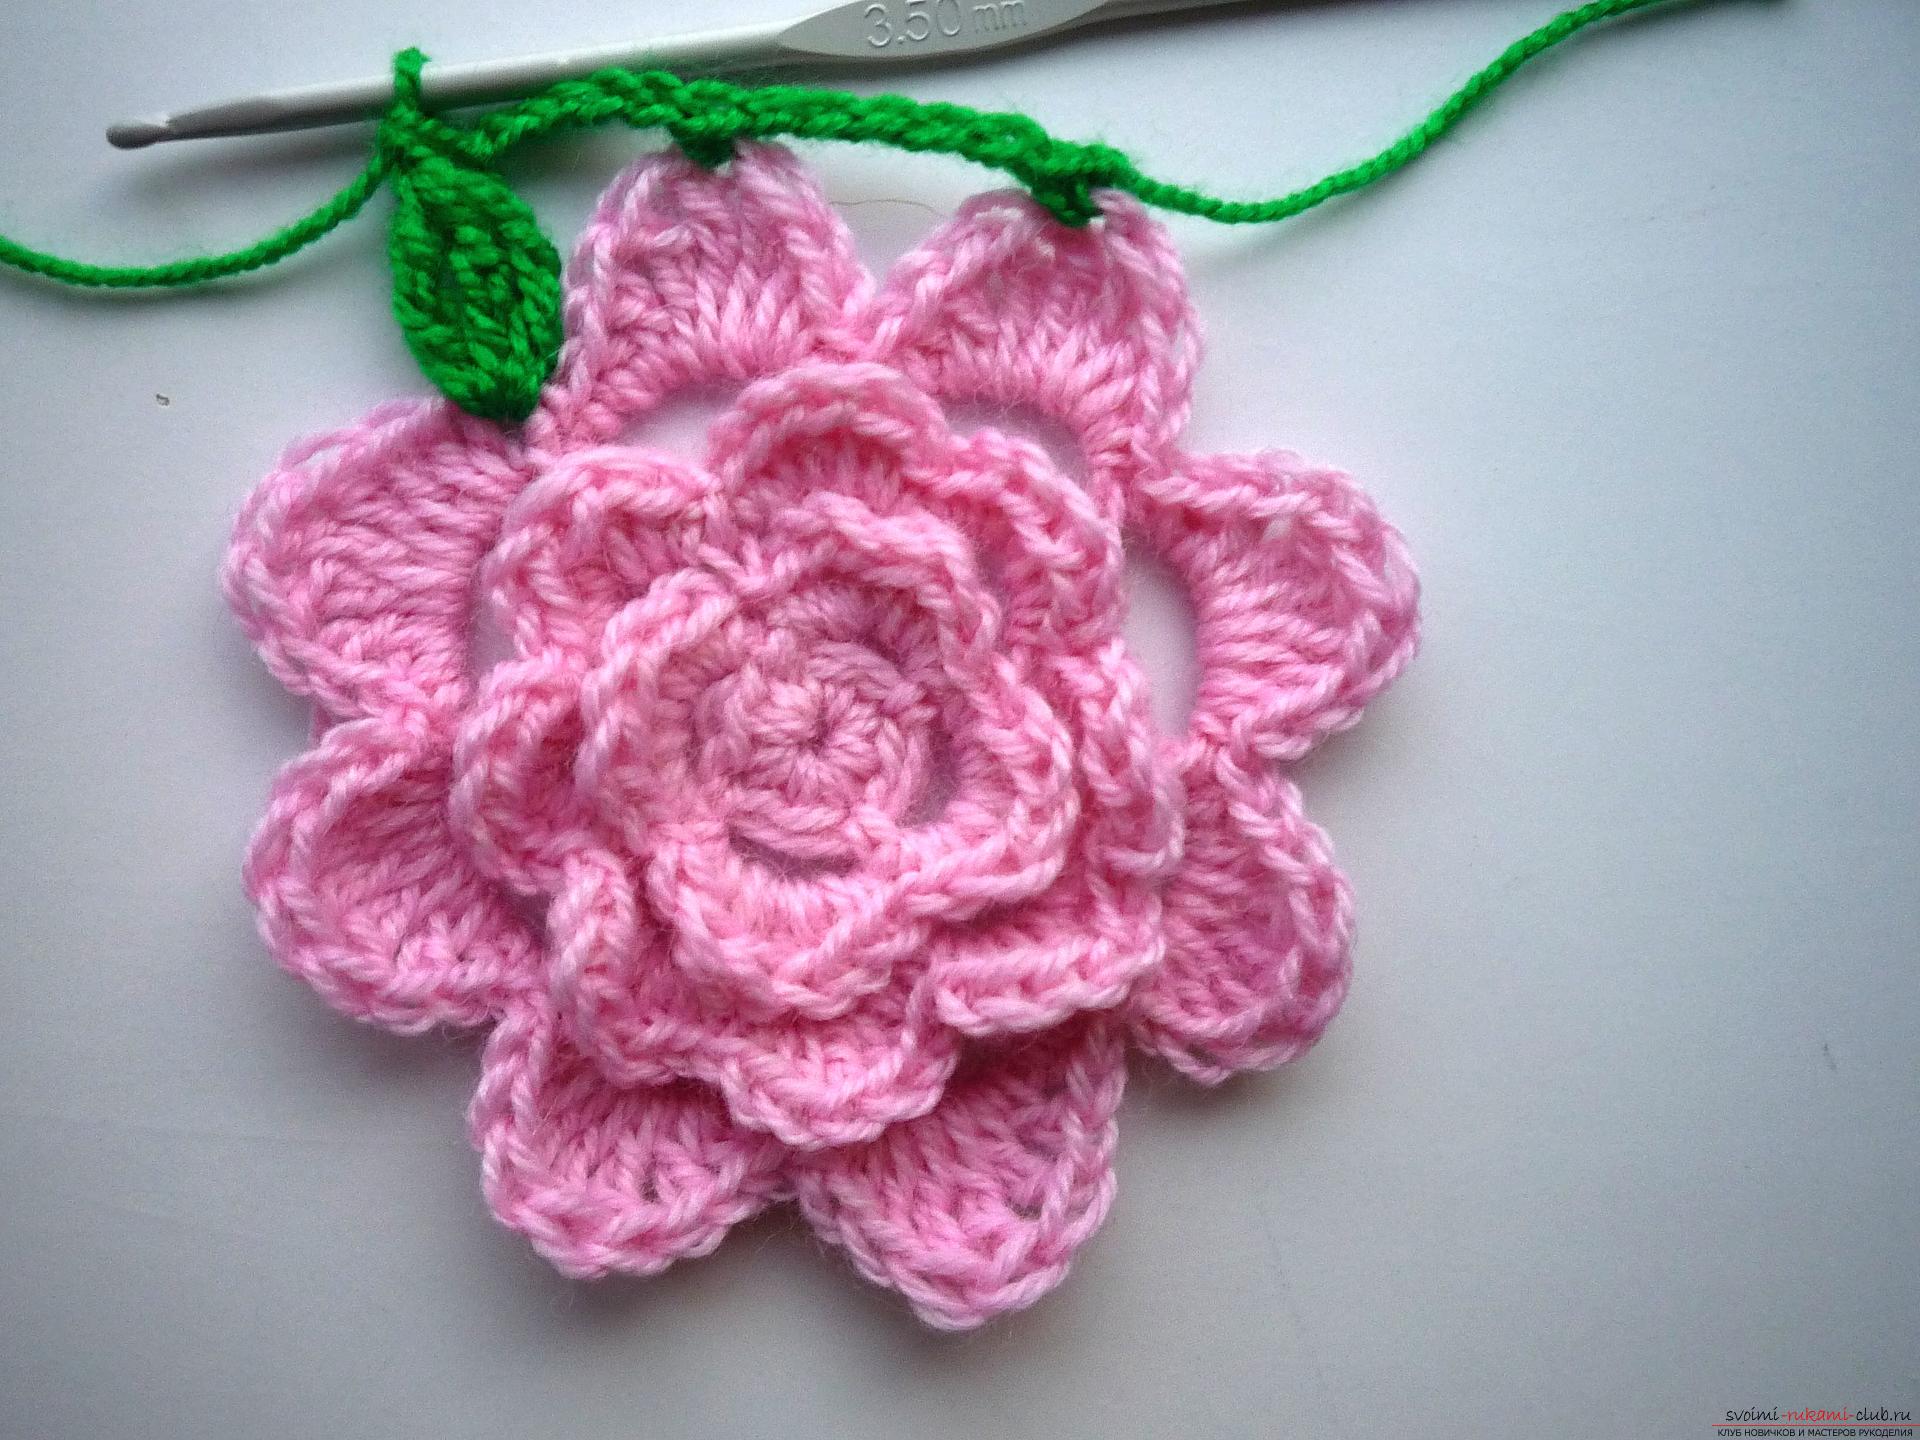 This crochet masterclass contains a crochet color scheme for the plaid .. Photo # 16